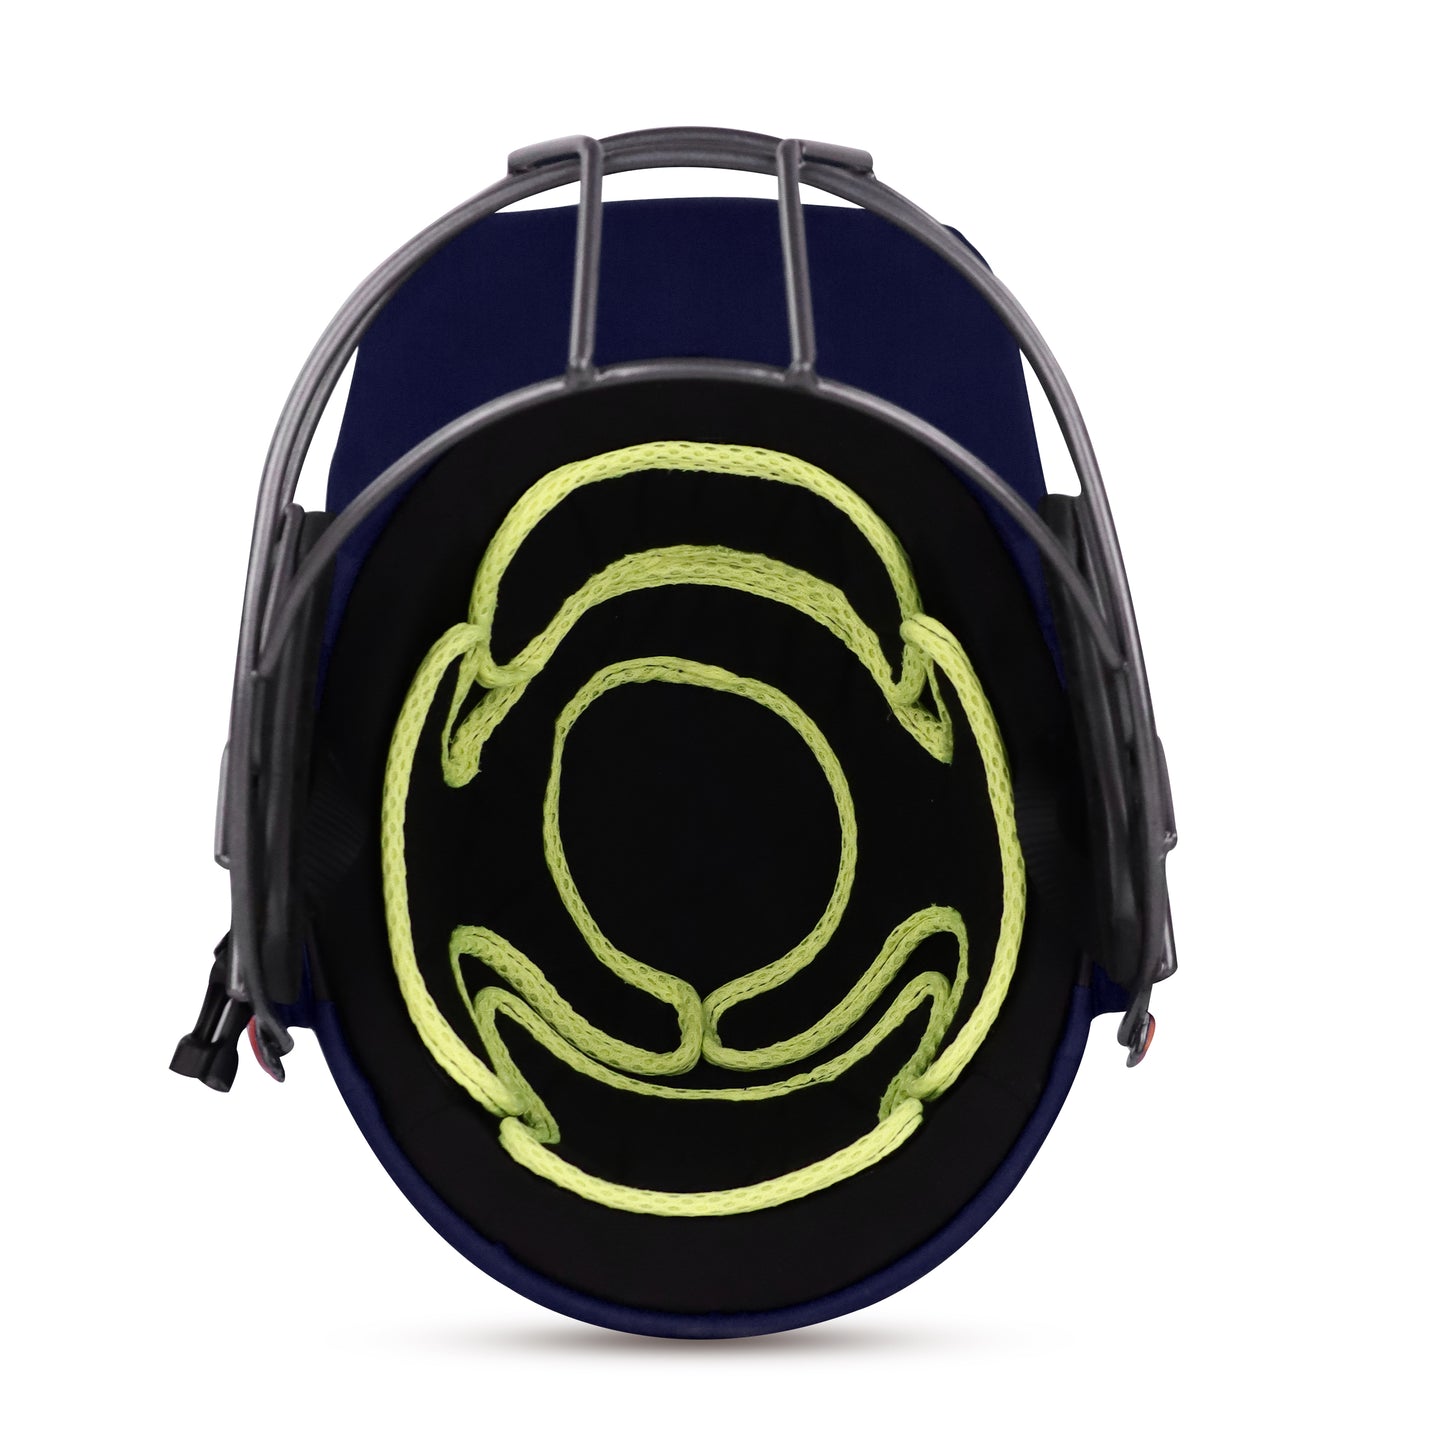 Steelbird Hitz Mild Steel Premium Cricket Helmet for Men & Boys with Neck Guard (Fixed Spring Steel Grill | Light Weight) (Blue Fabric with Green Interior)